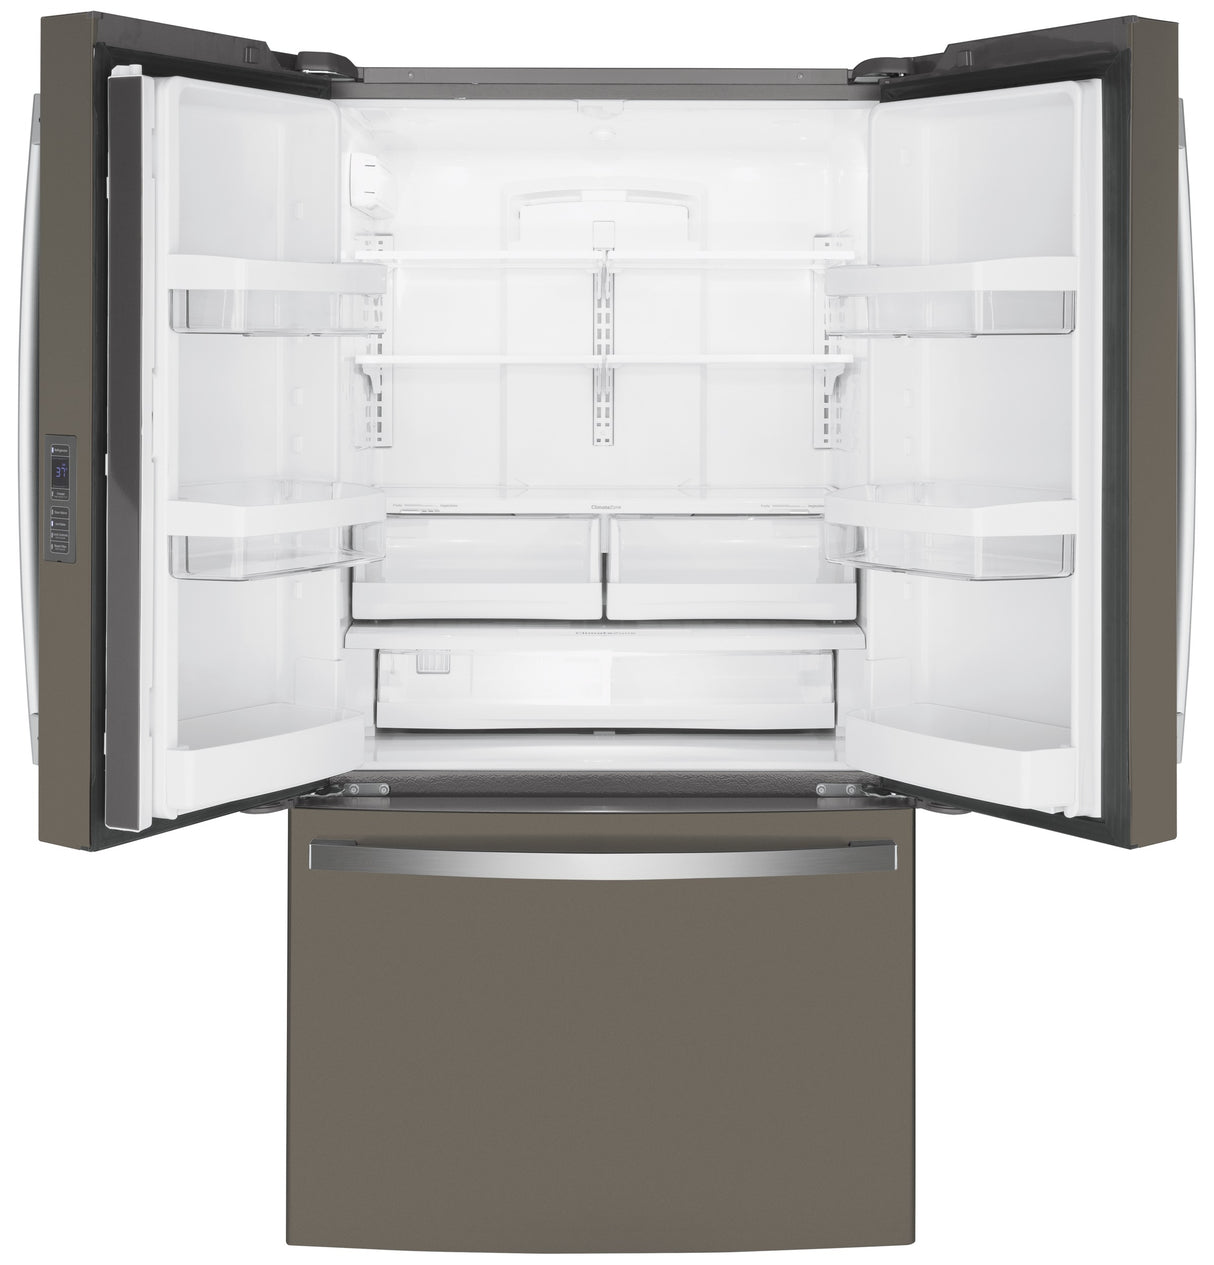 GE(R) ENERGY STAR(R) 23.1 Cu. Ft. Counter-Depth French-Door Refrigerator - (GWE23GMNES)